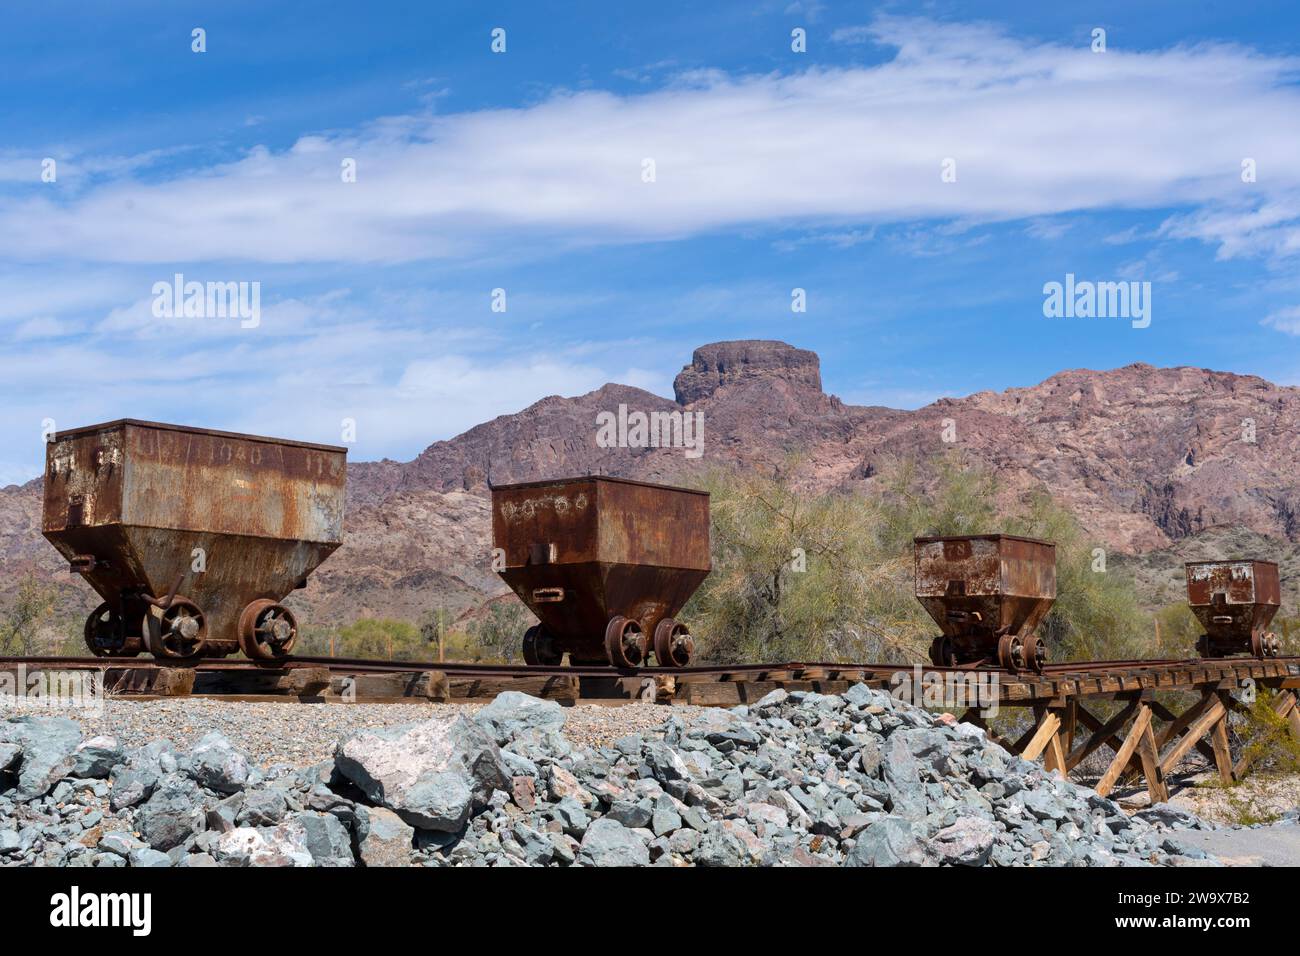 Ore cars at the Hull Mine, Castle Dome on horizon, Arizona Stock Photo